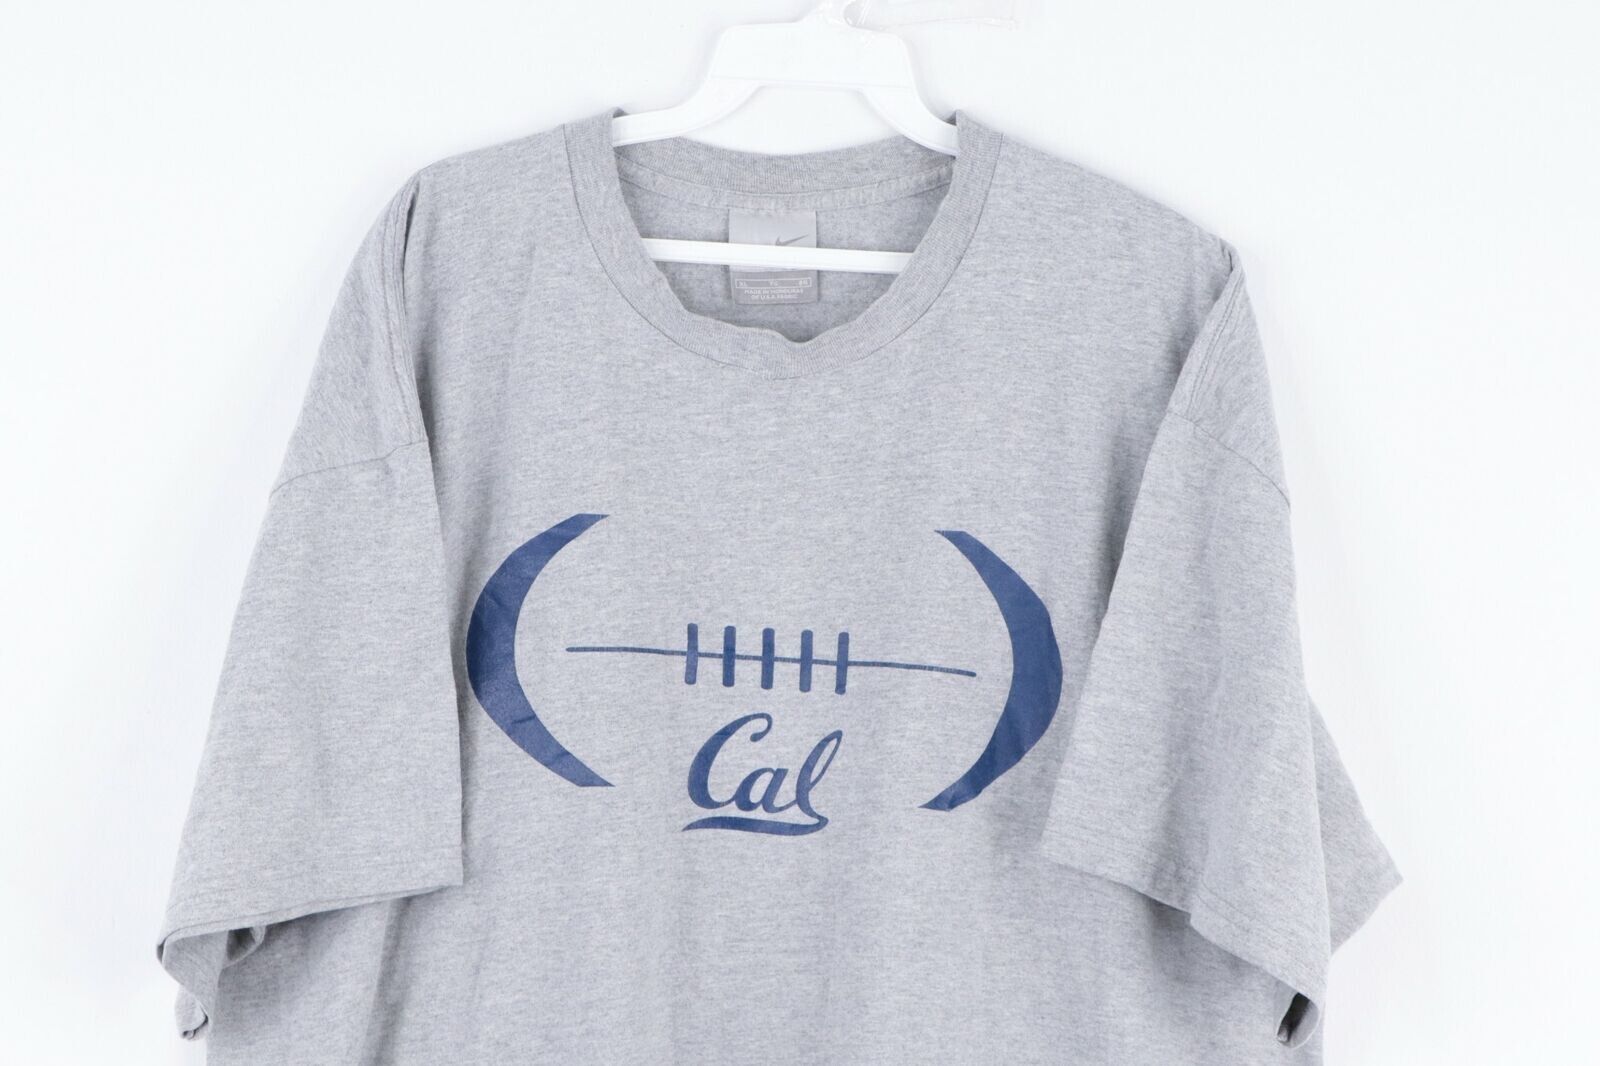 Nike Vintage Nike University of California Cal Football Shirt Size US XL / EU 56 / 4 - 2 Preview